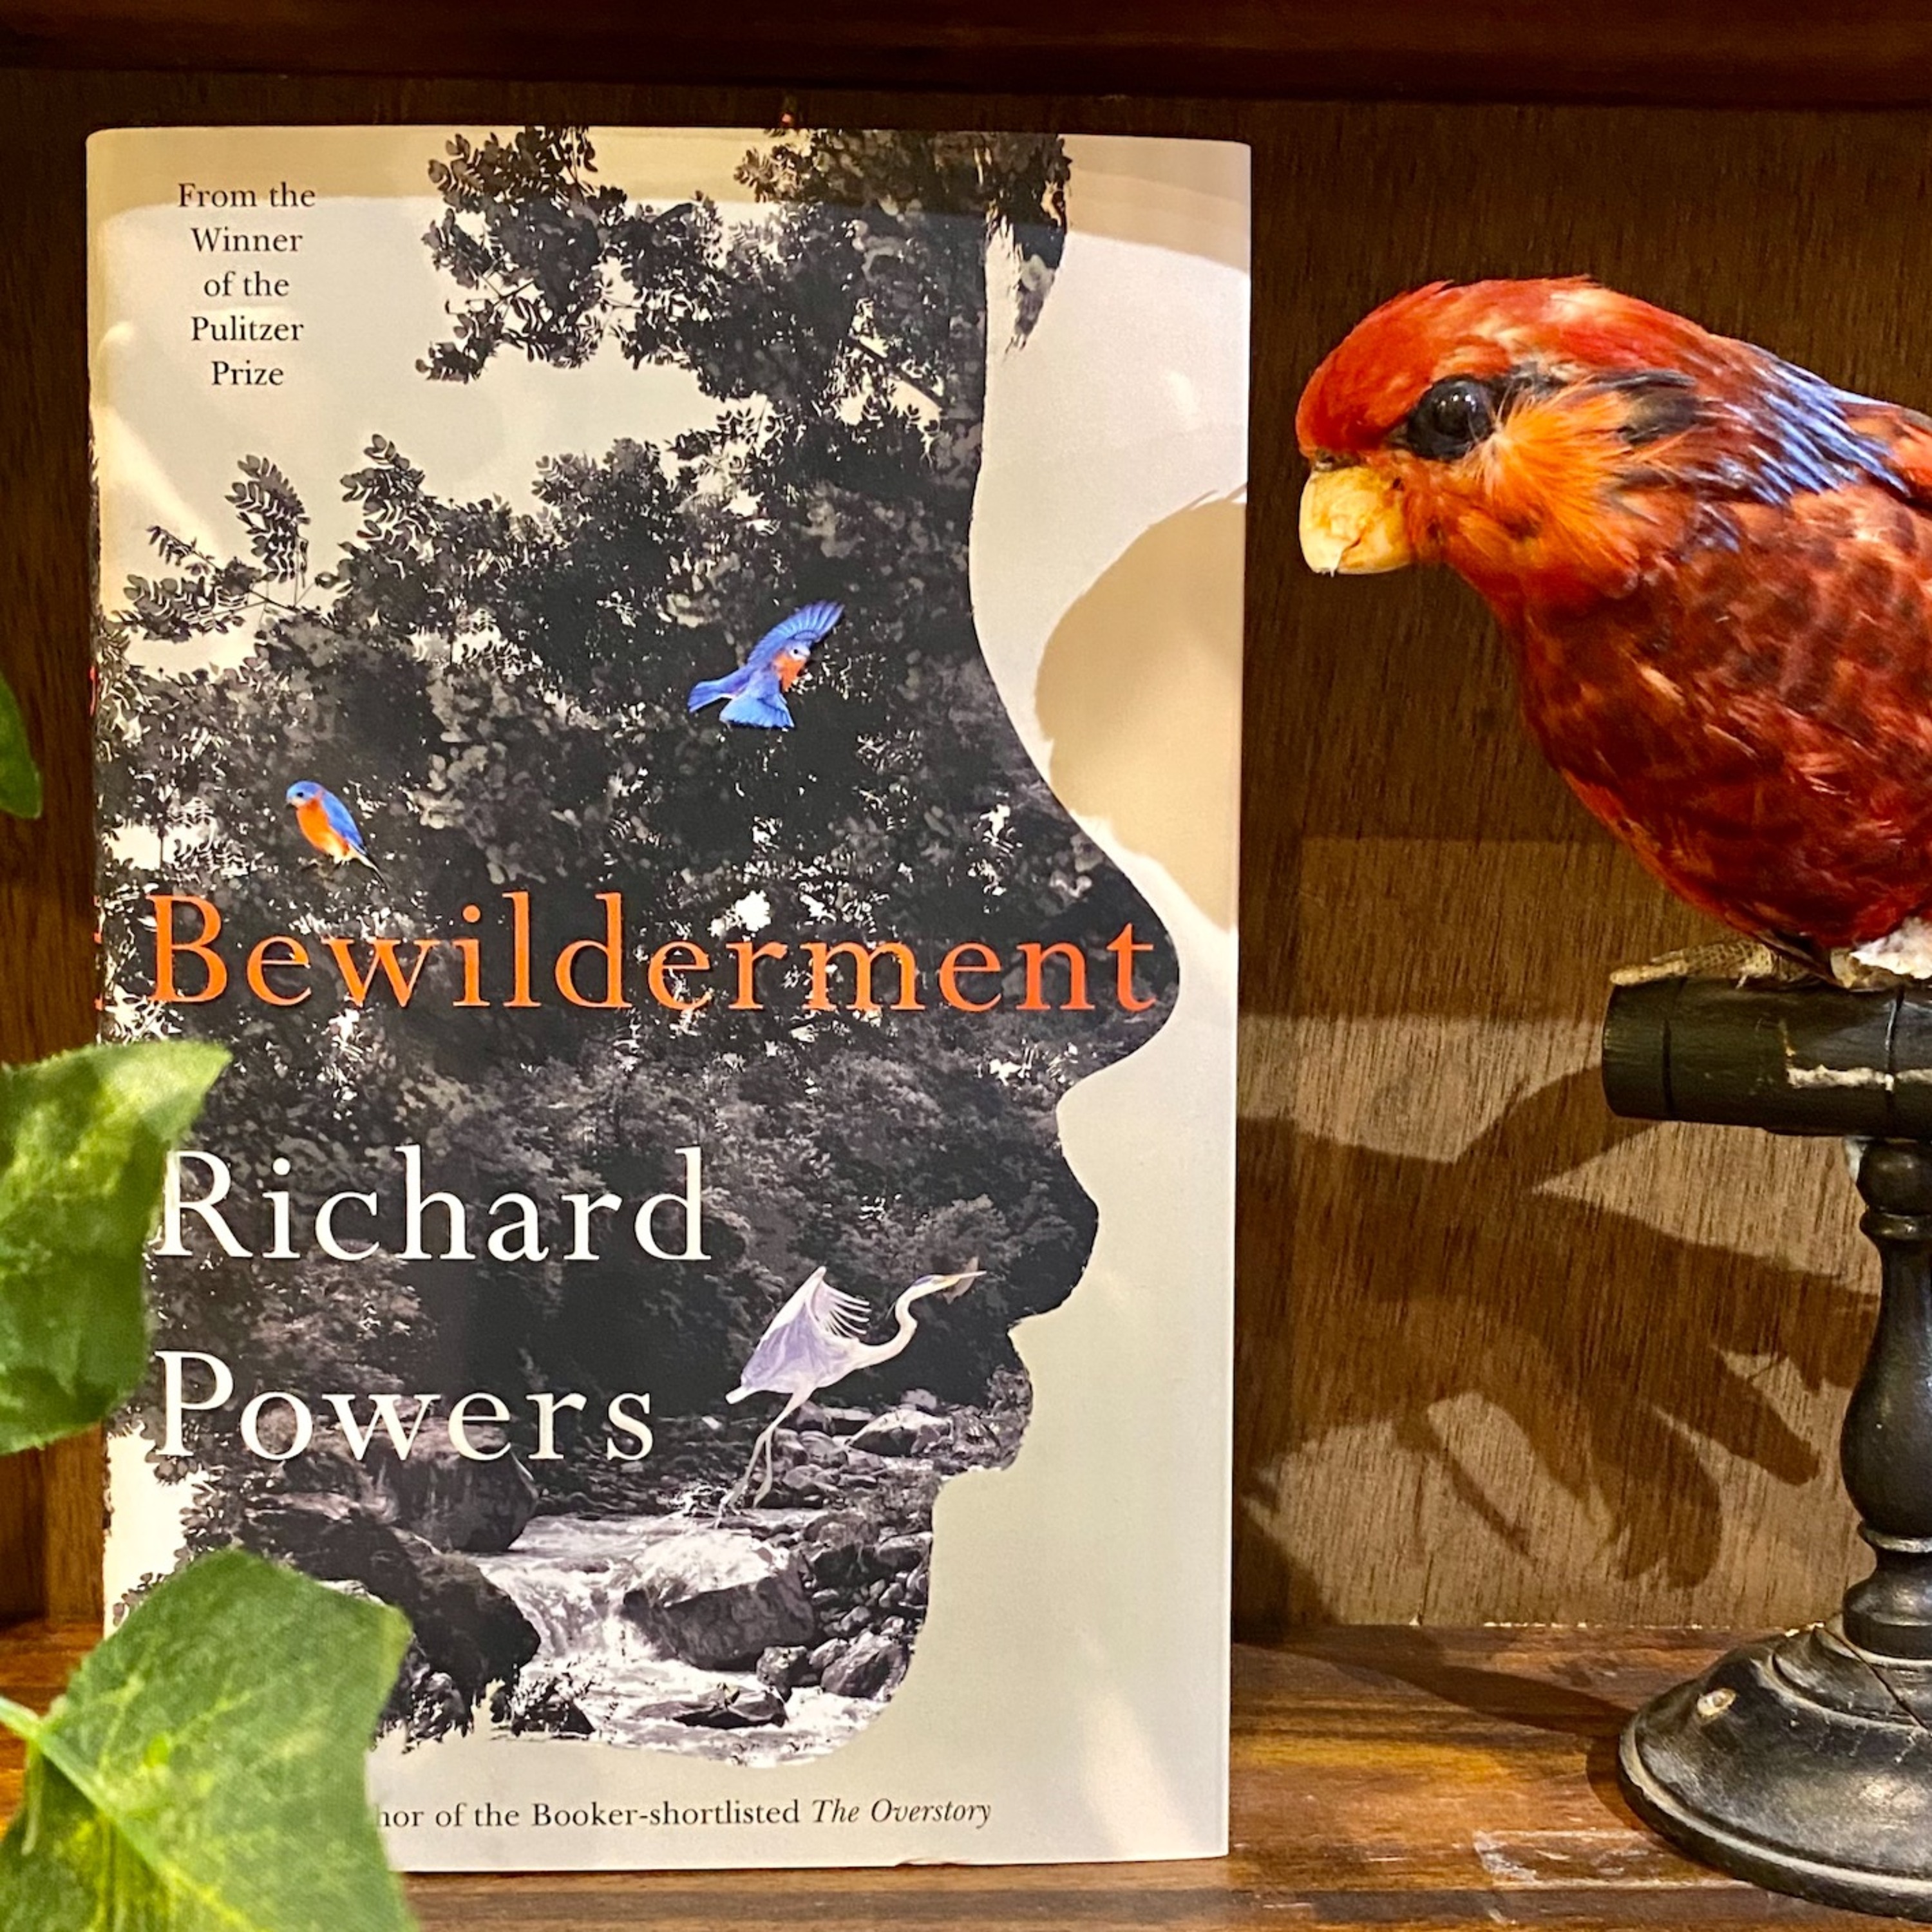 Richard Powers on Bewilderment